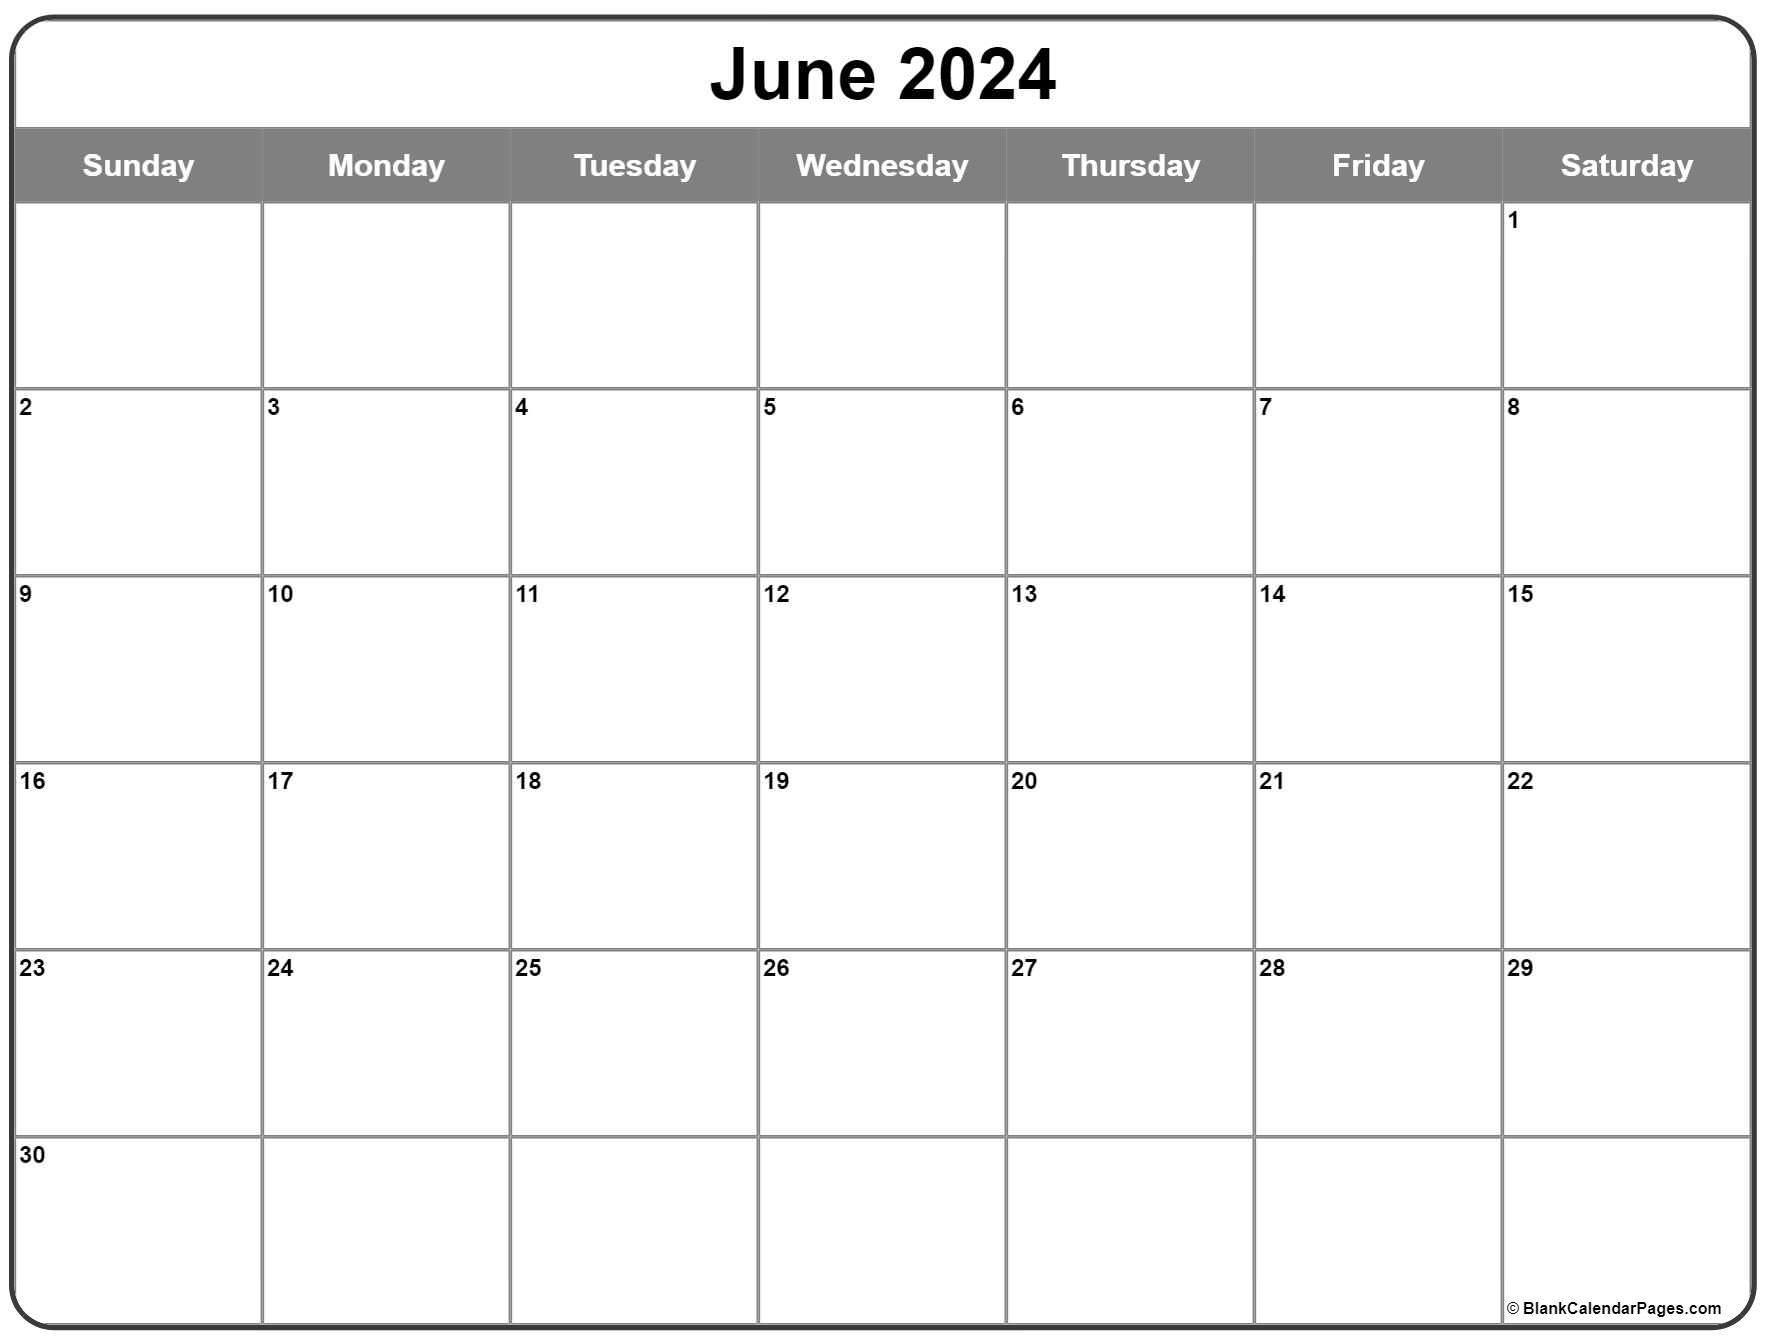 June 2024 Calendar Free Printable Calendar | Free Printable 2024 Monthly Calendar June